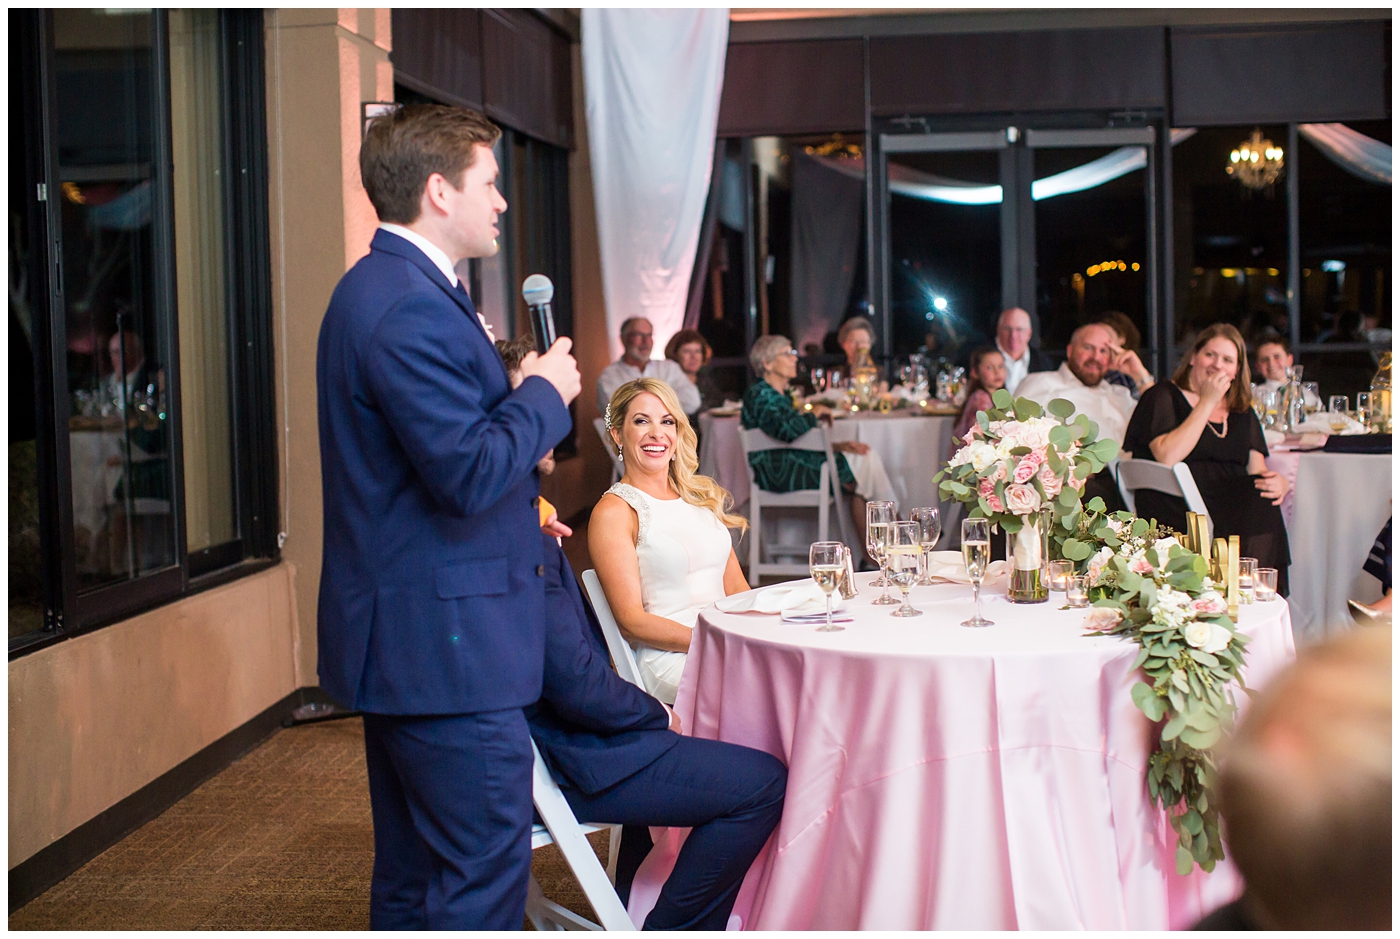 best man toast at wedding reception in ballroom